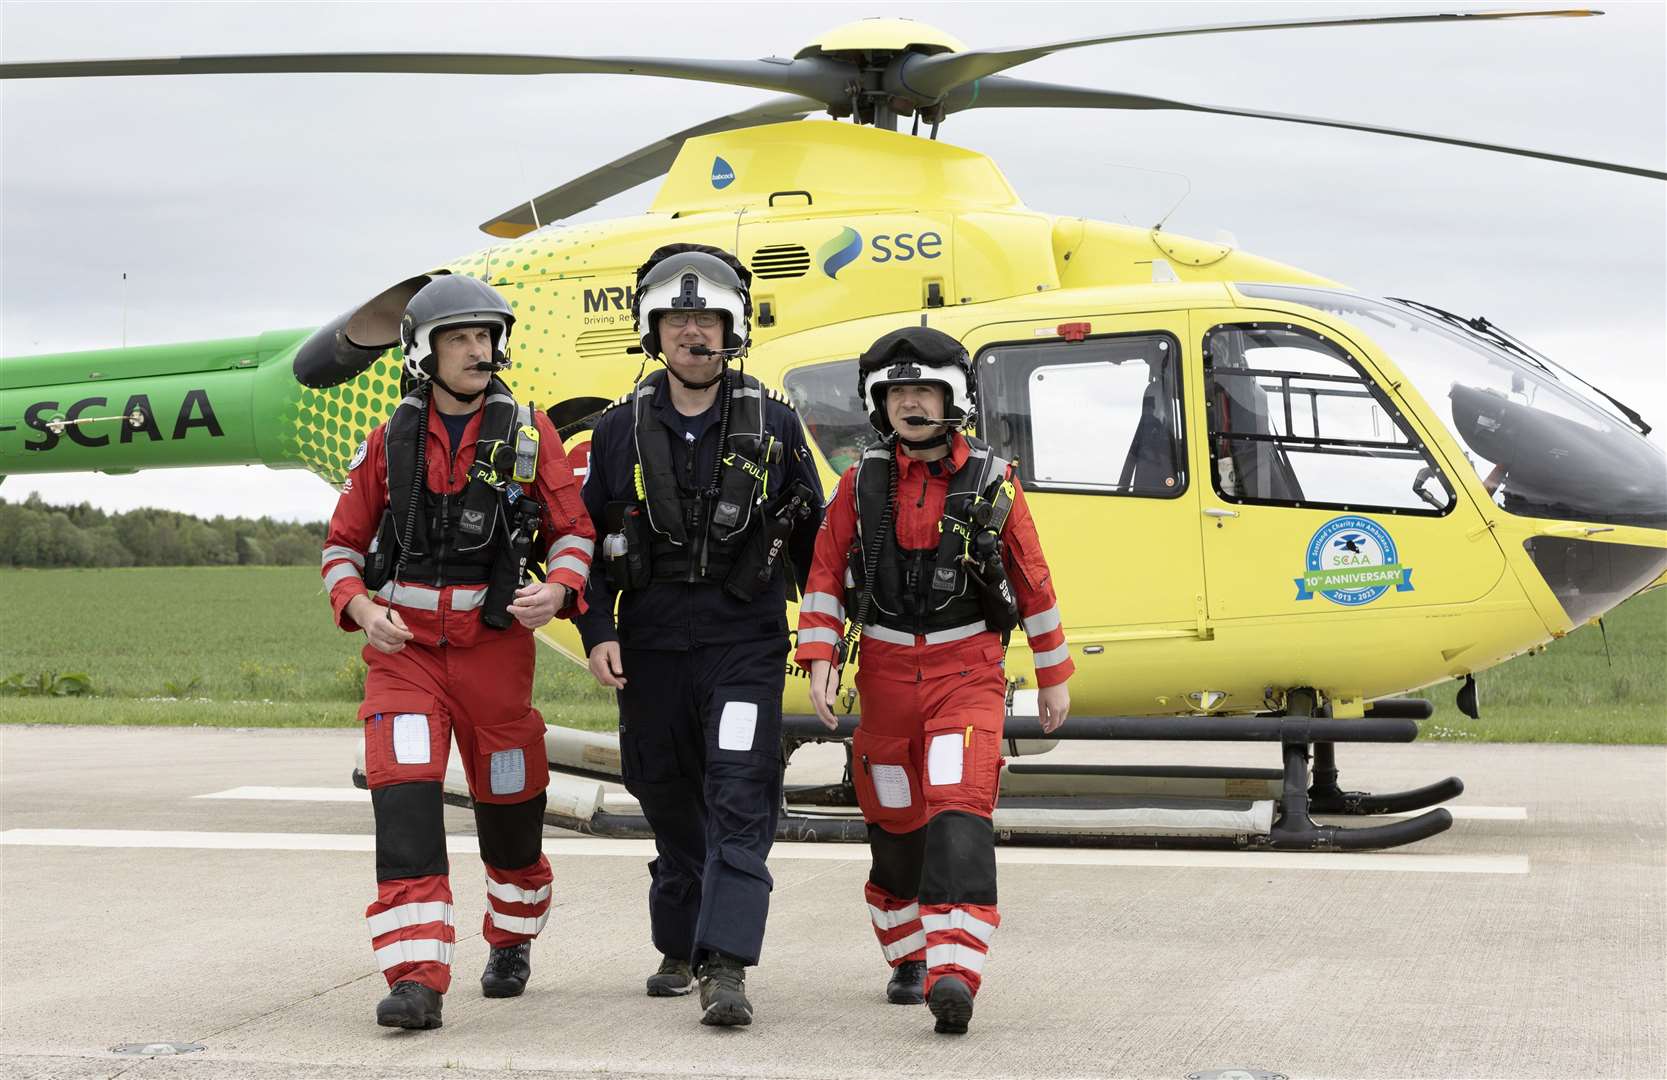 Scotland’s Charity Air Ambulance has marked its 10th anniversary.